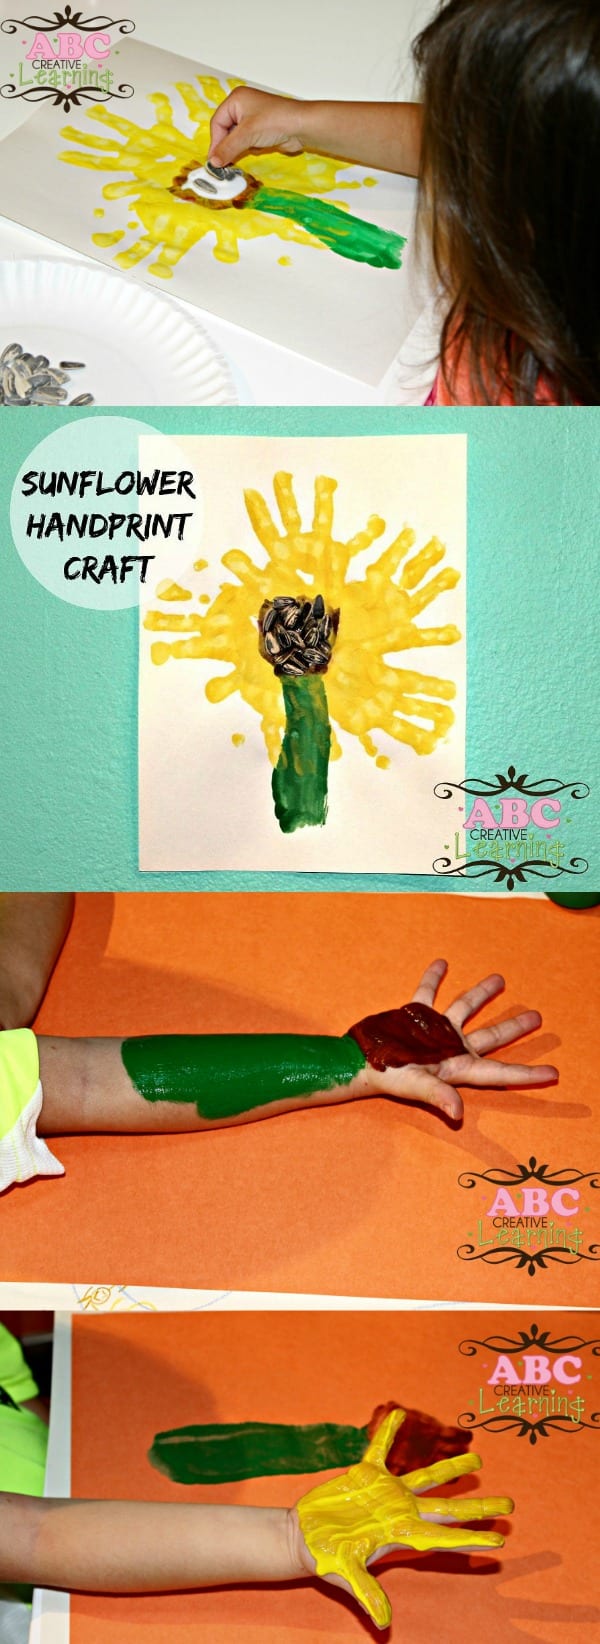 Sunflower Handprint Craft